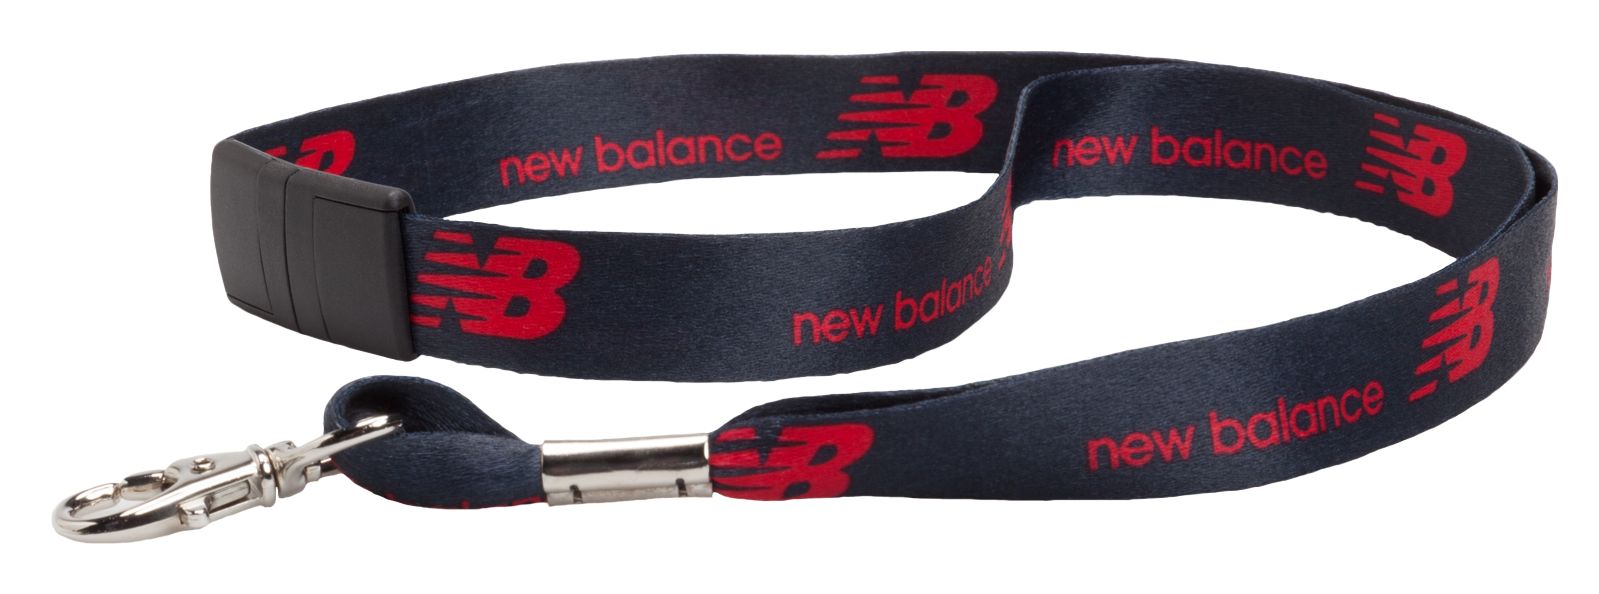 New Balance Lanyard - New Balance